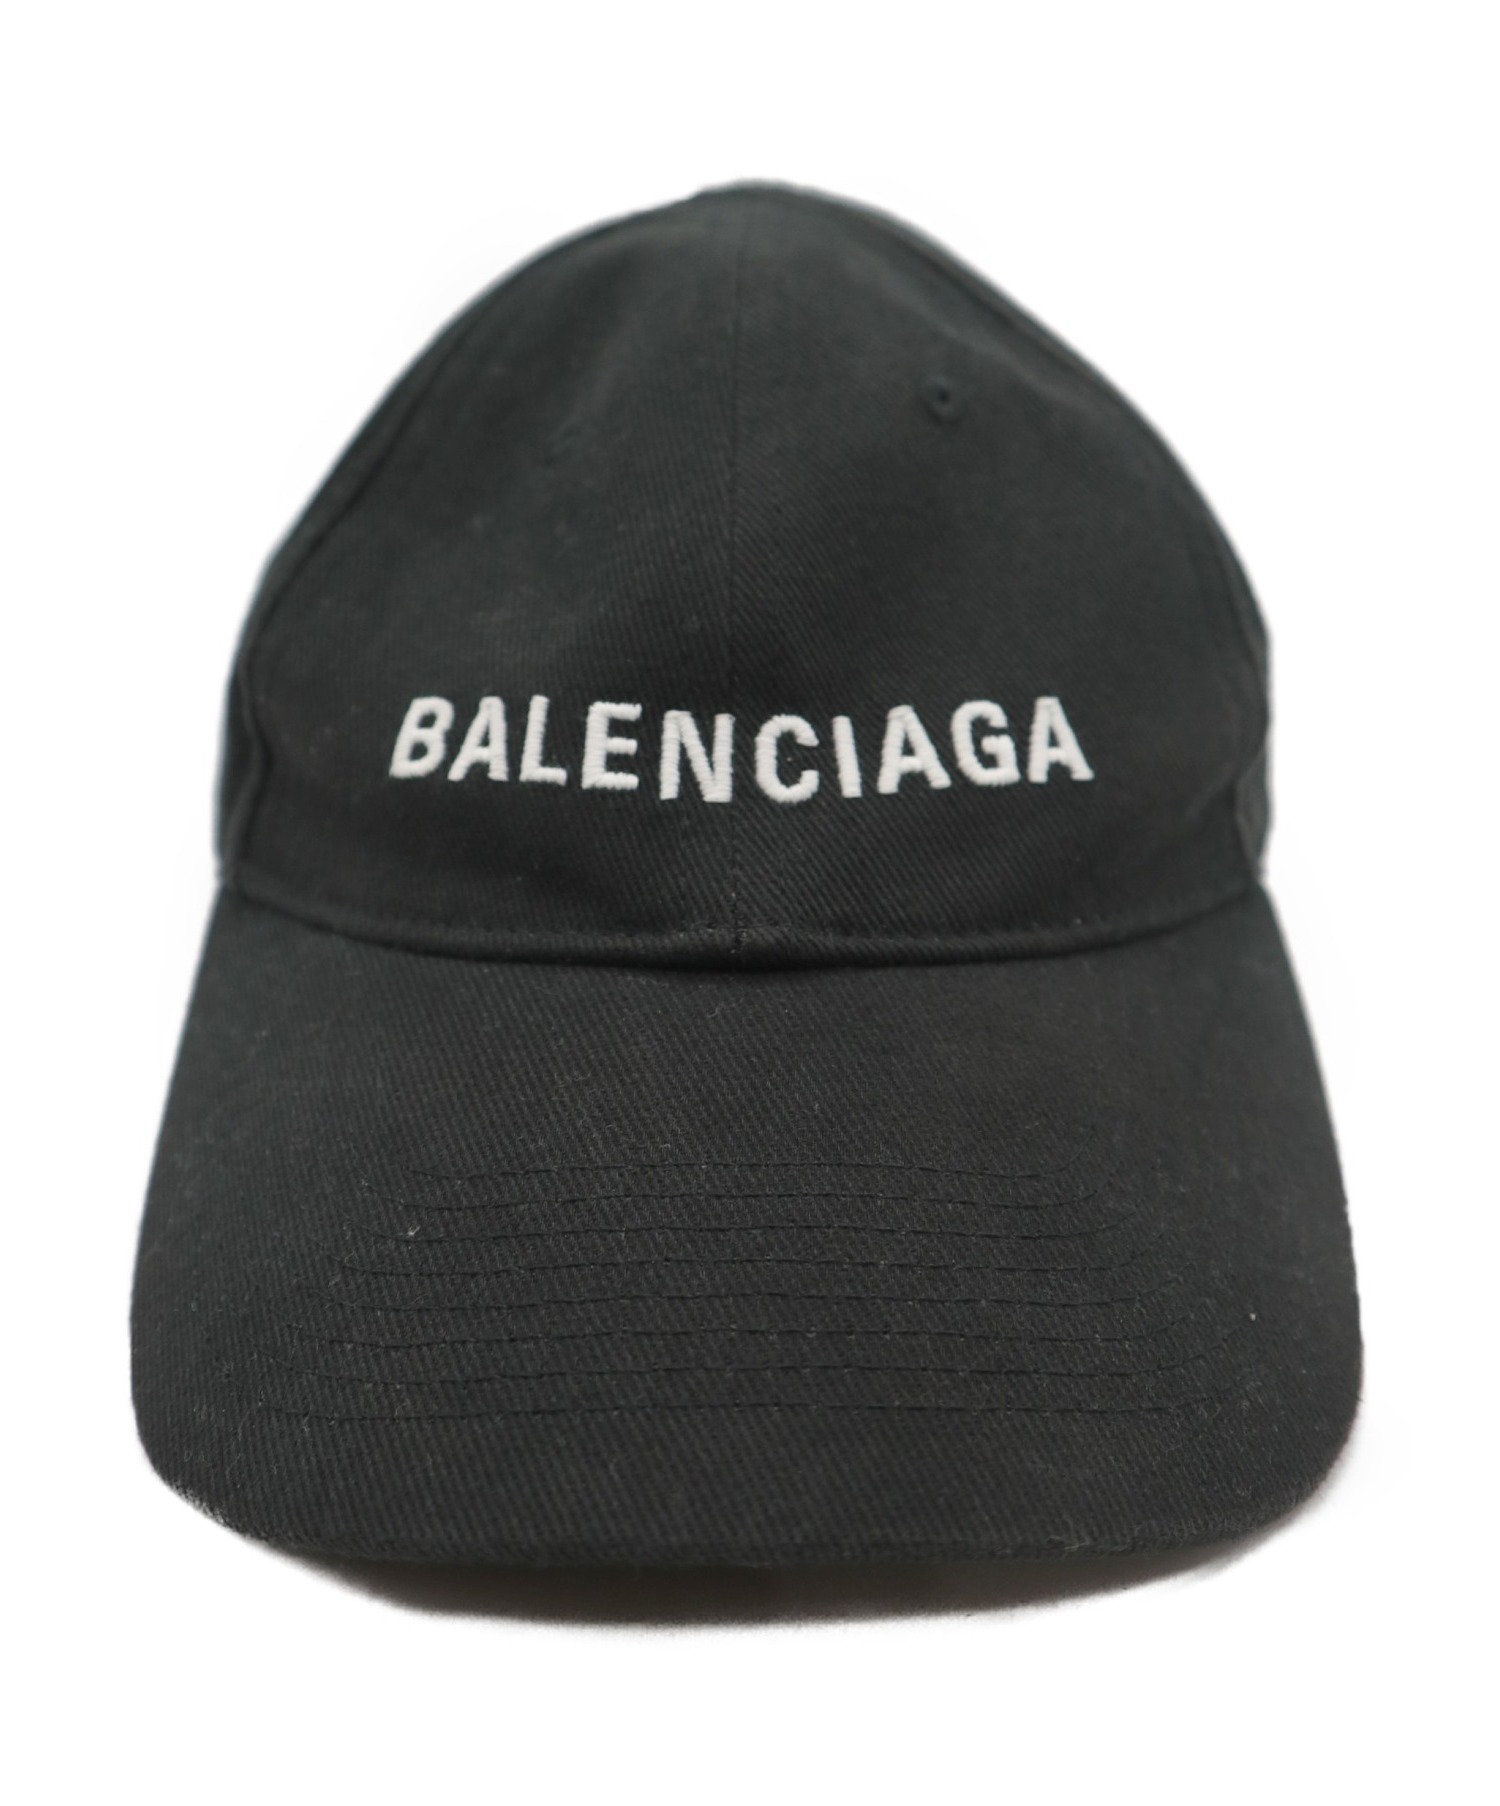 BALENCIAGA/バレンシアガ キャップ